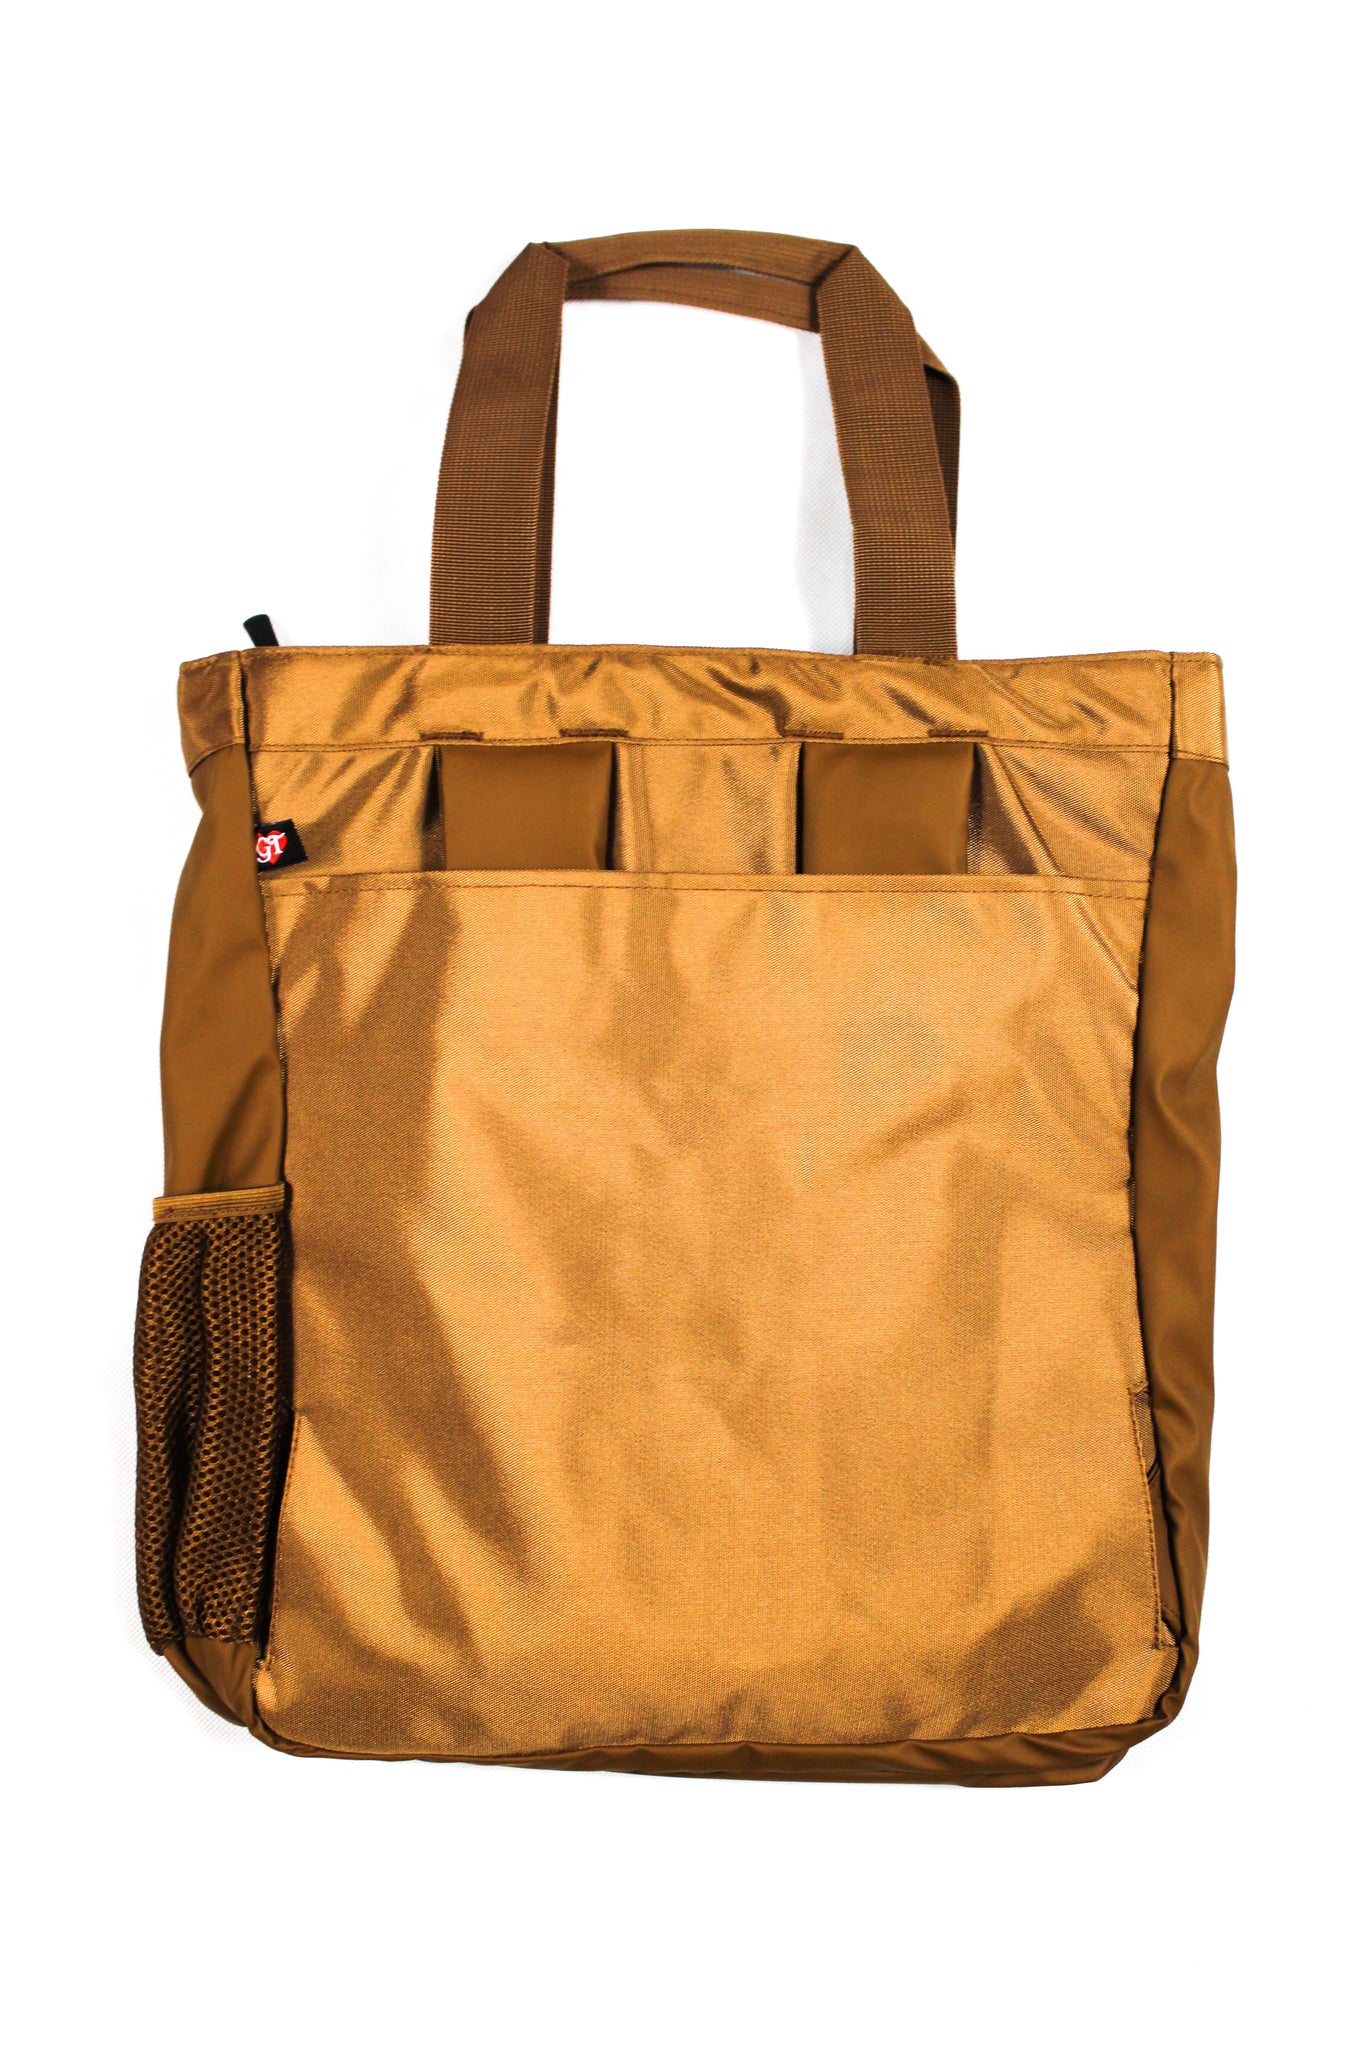 GTech Convertible Backpack Tote (Teak)